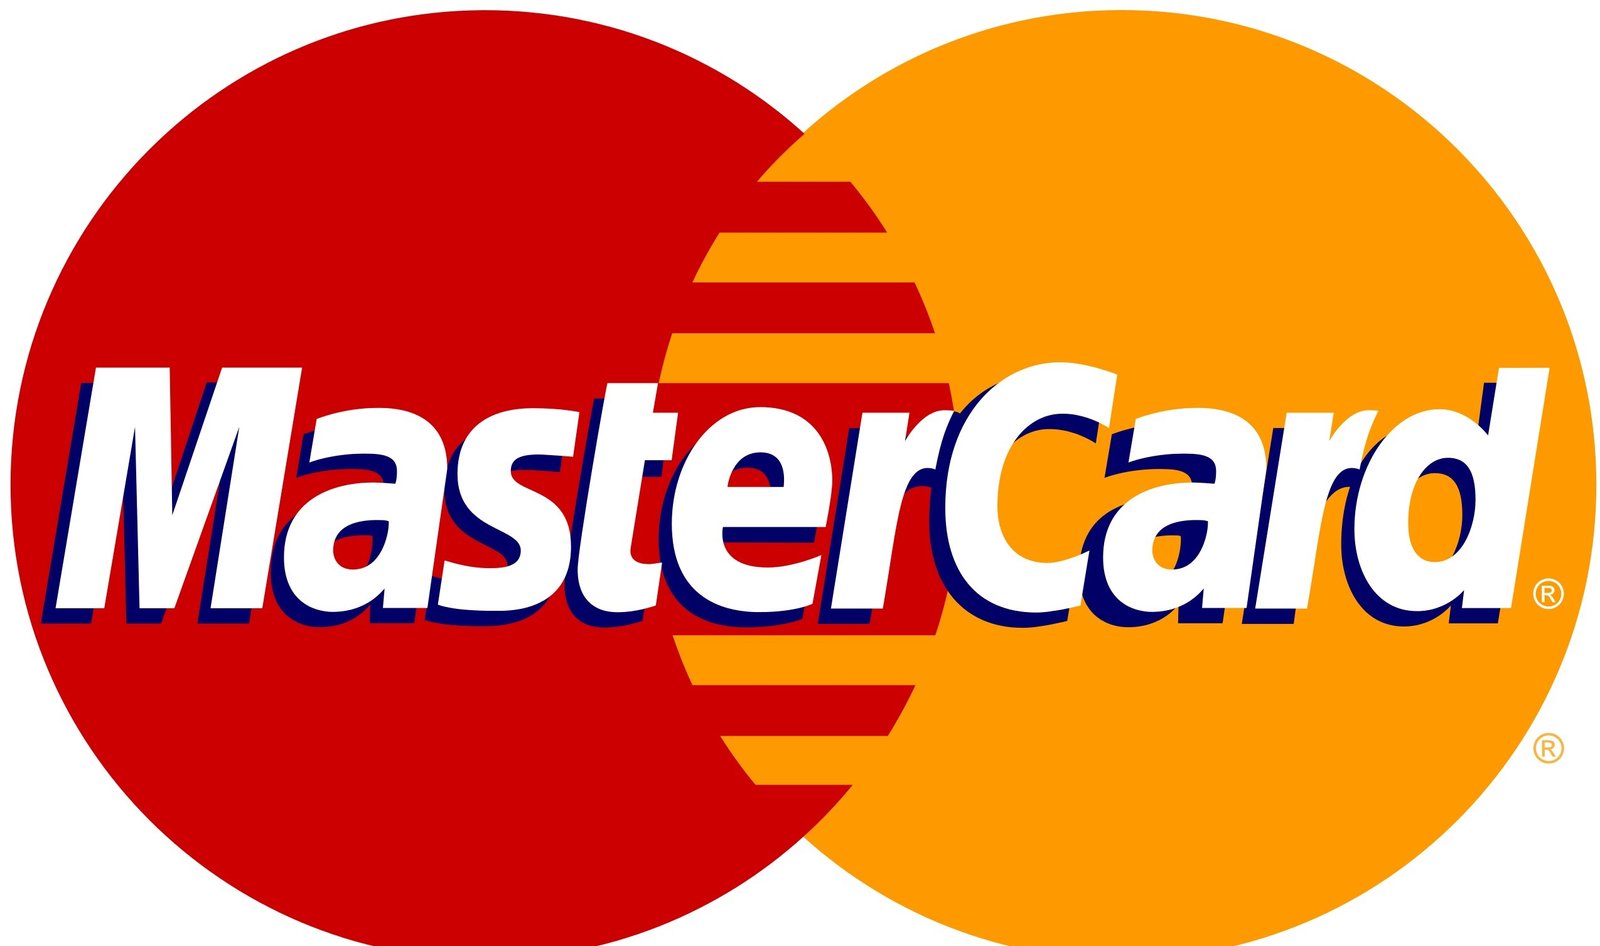 Mastercard Marketing Strategy